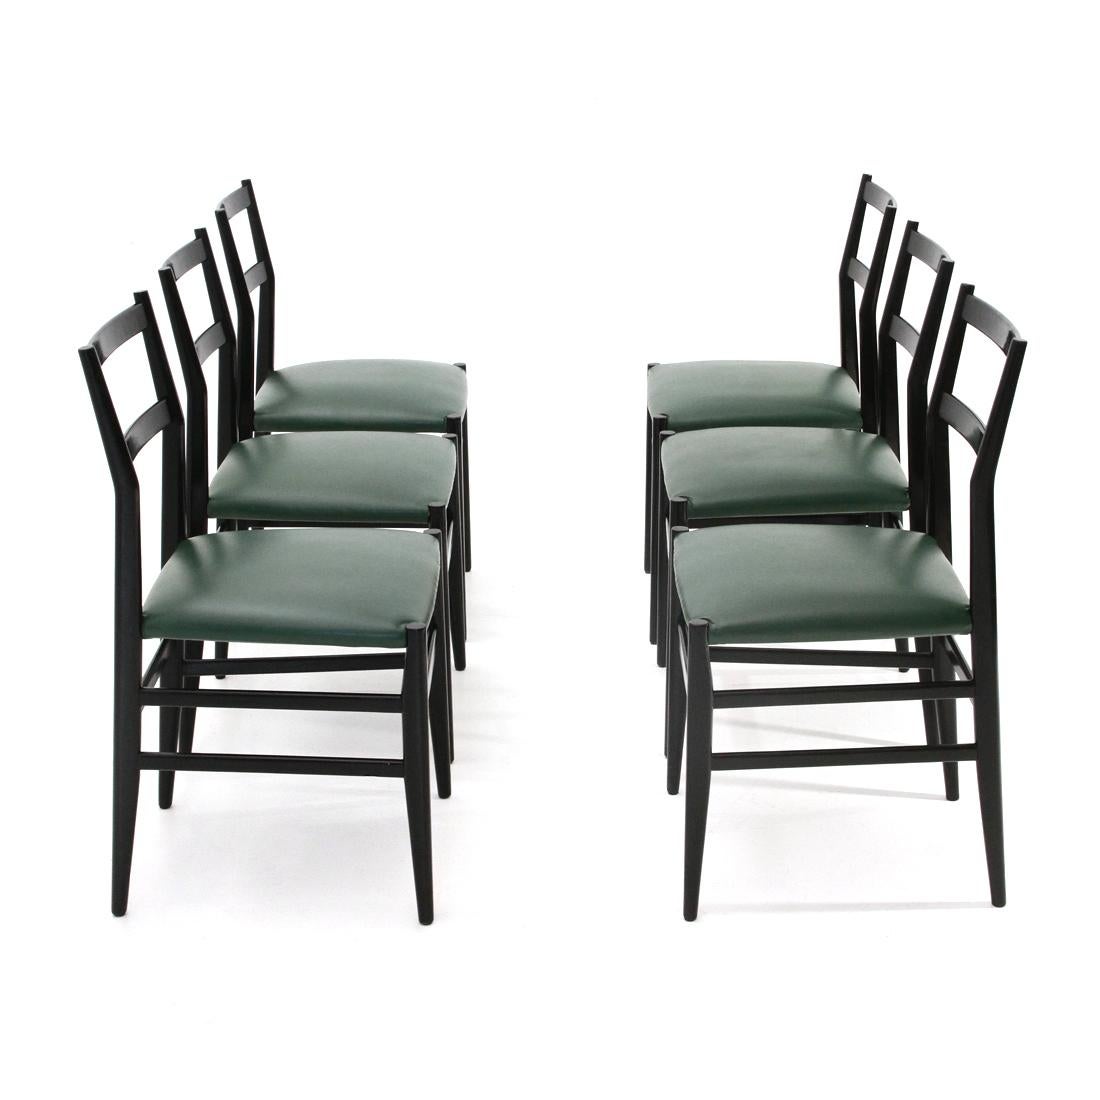 Mid-Century Modern 6 'Leggera' Chairs by Gio Ponti for Cassina, 1950s